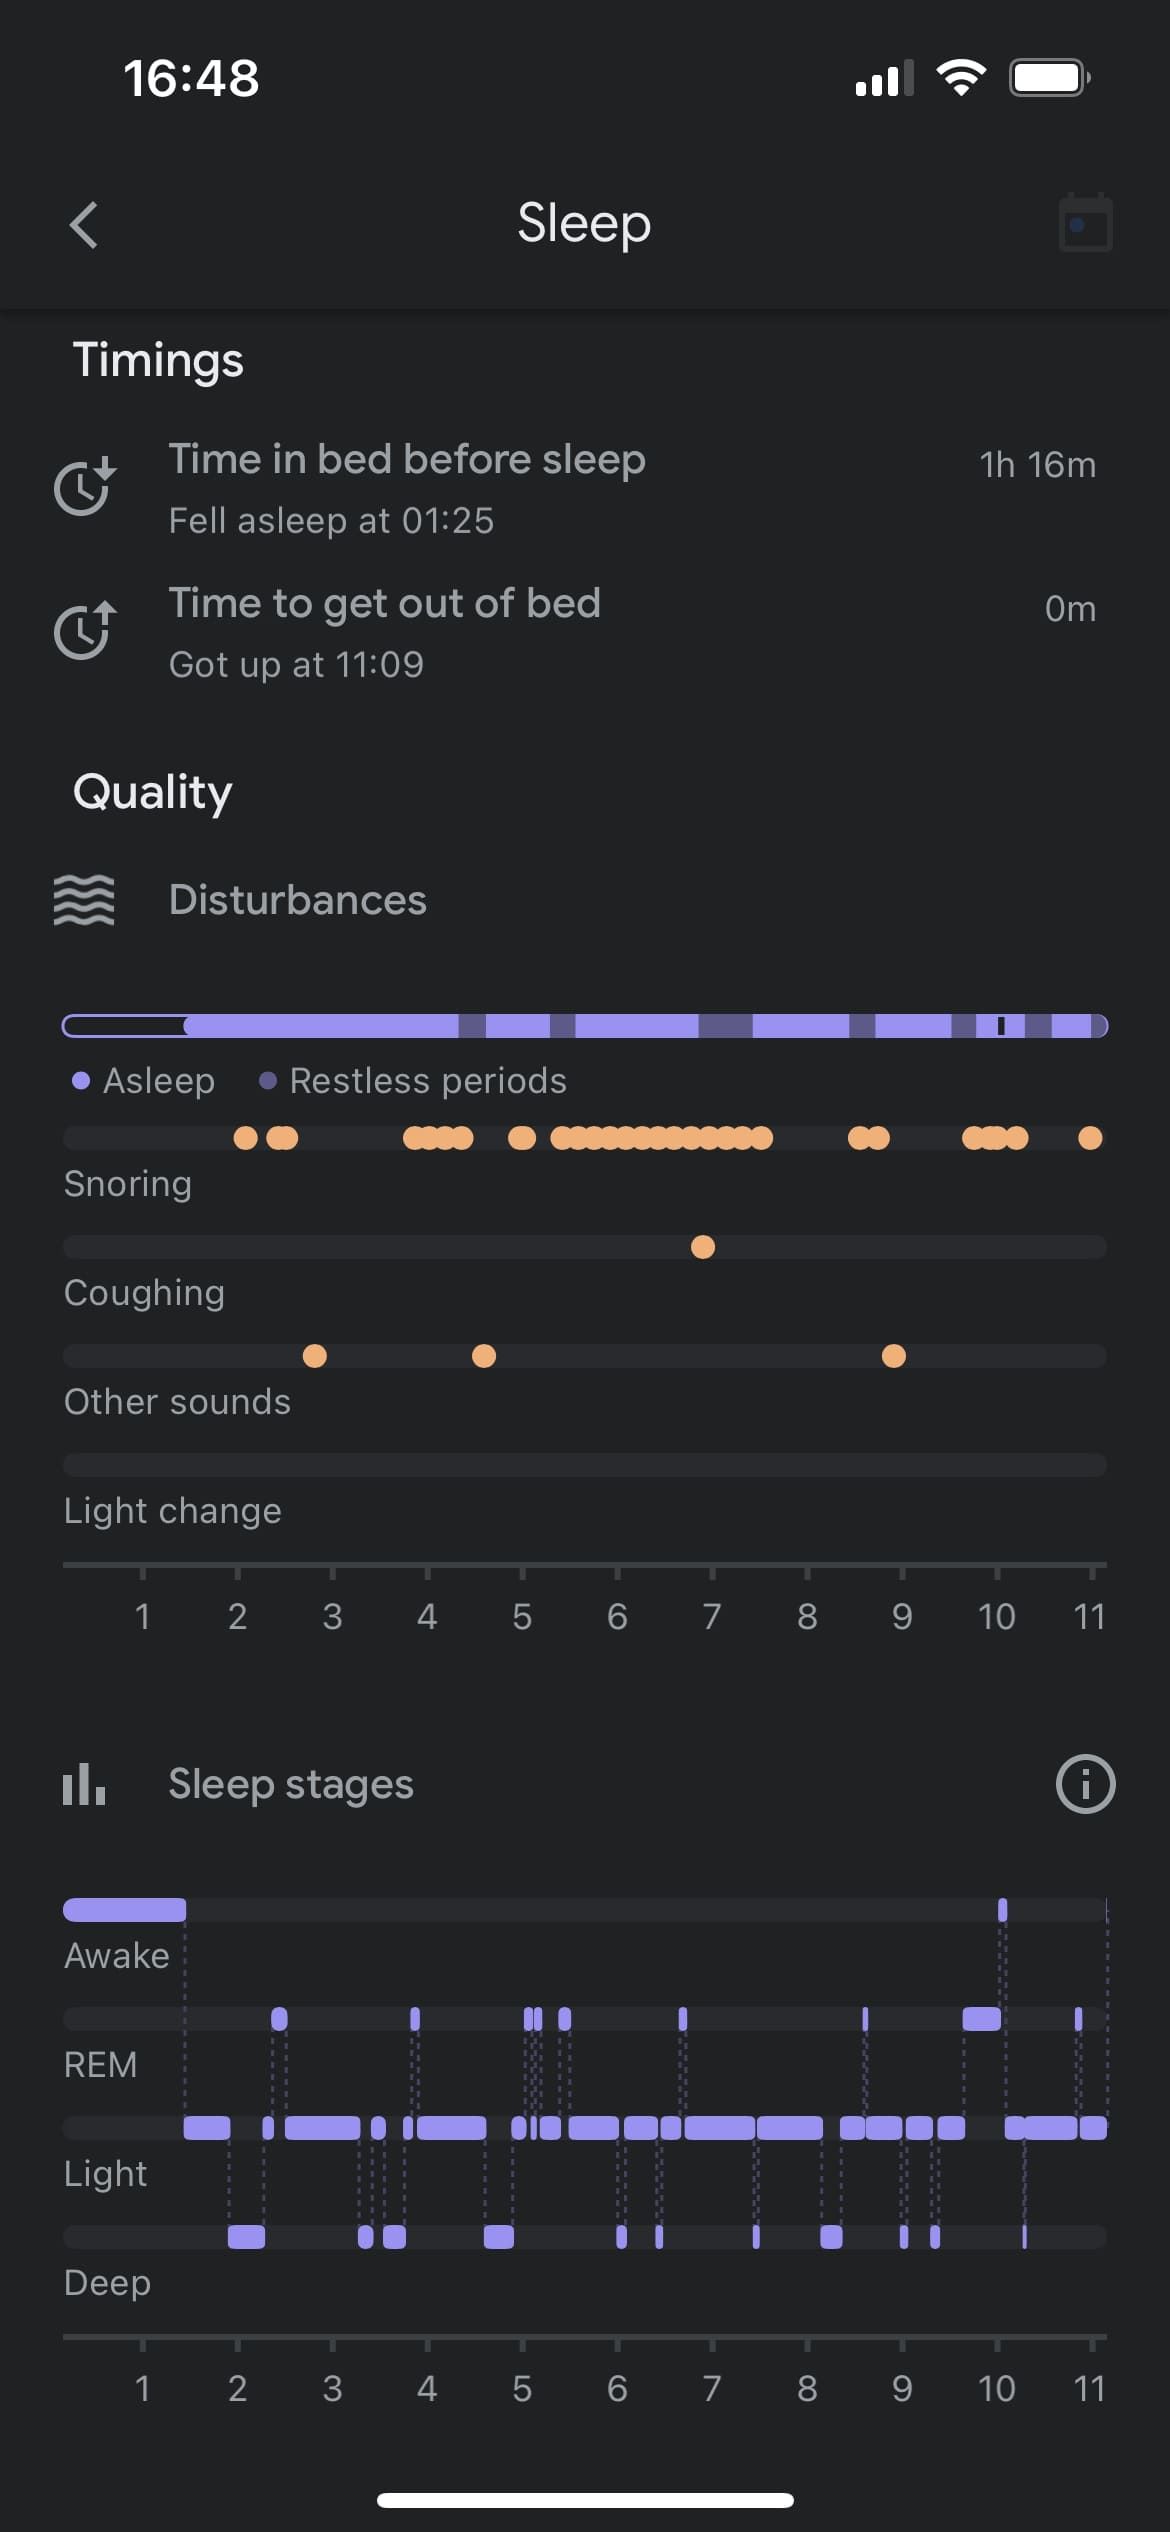 Google Fit Sleep Summary next page